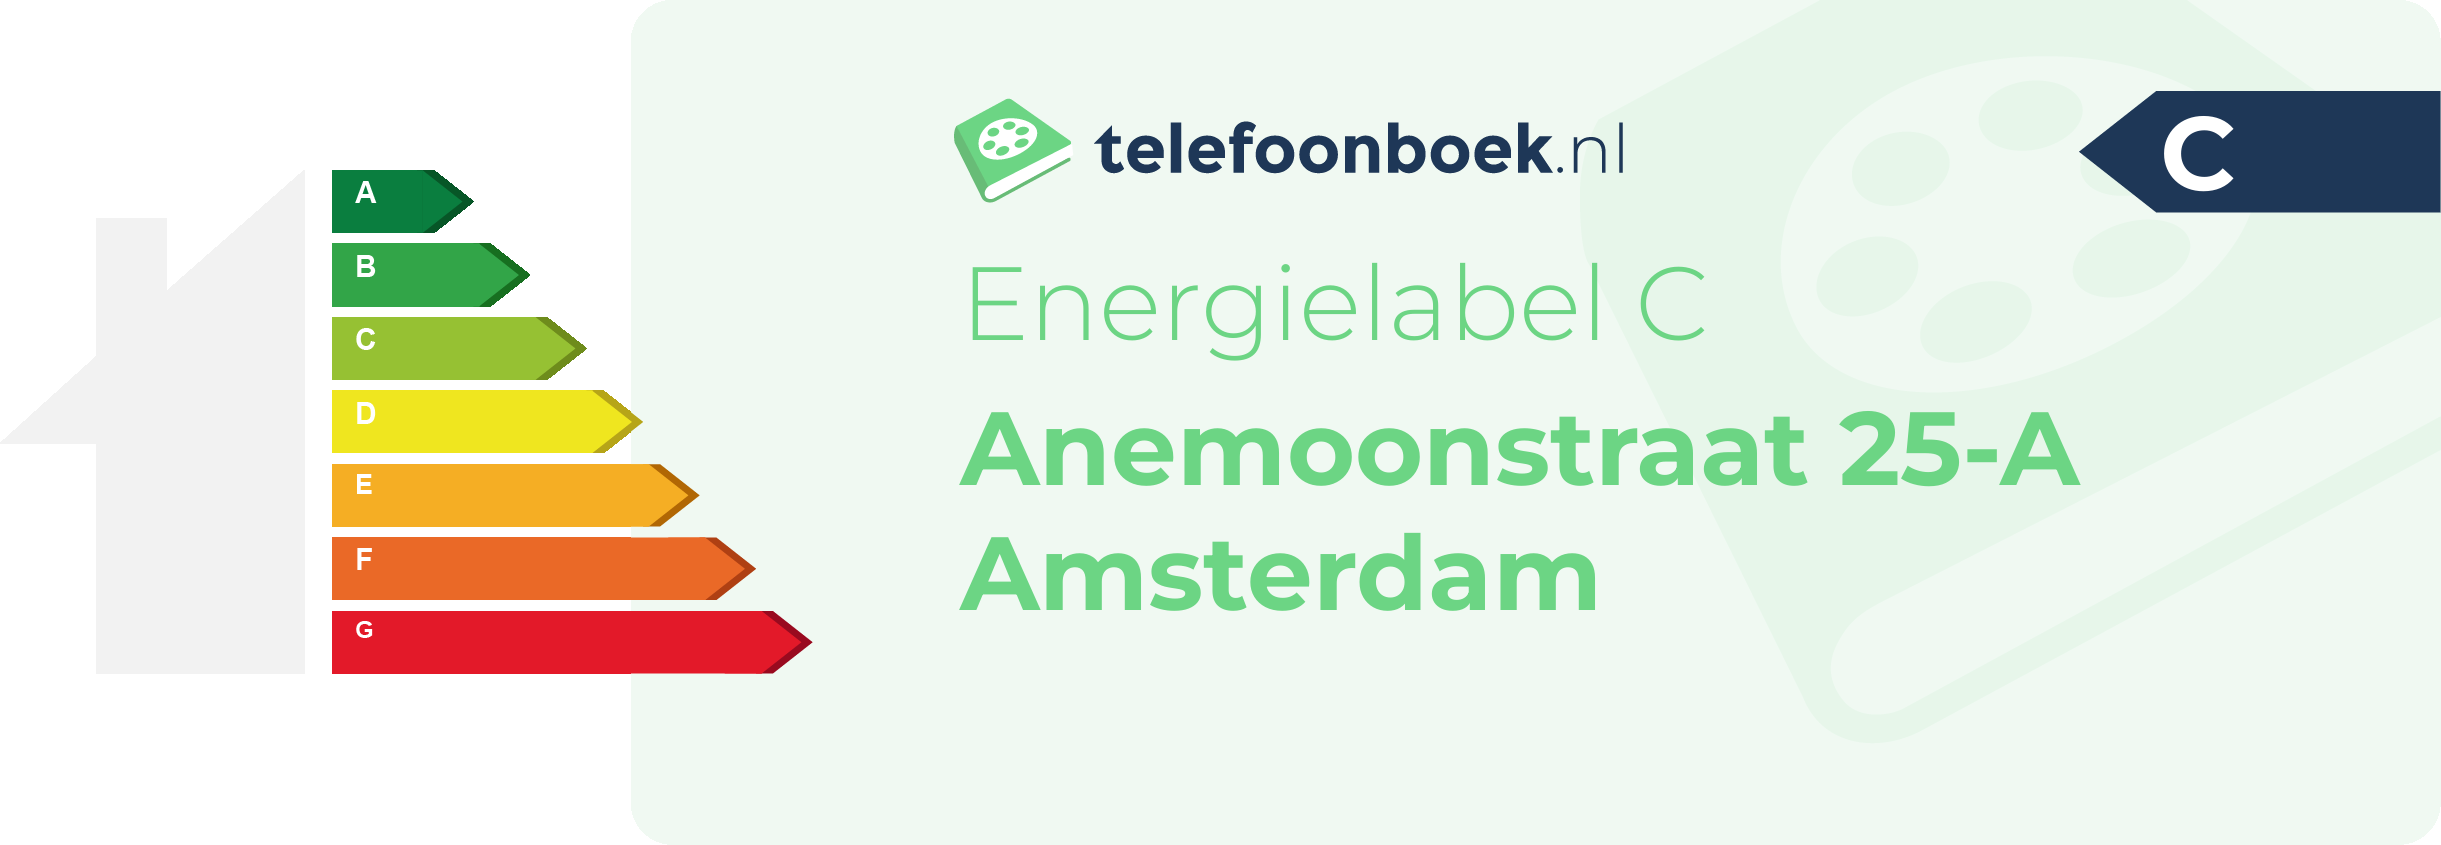 Energielabel Anemoonstraat 25-A Amsterdam